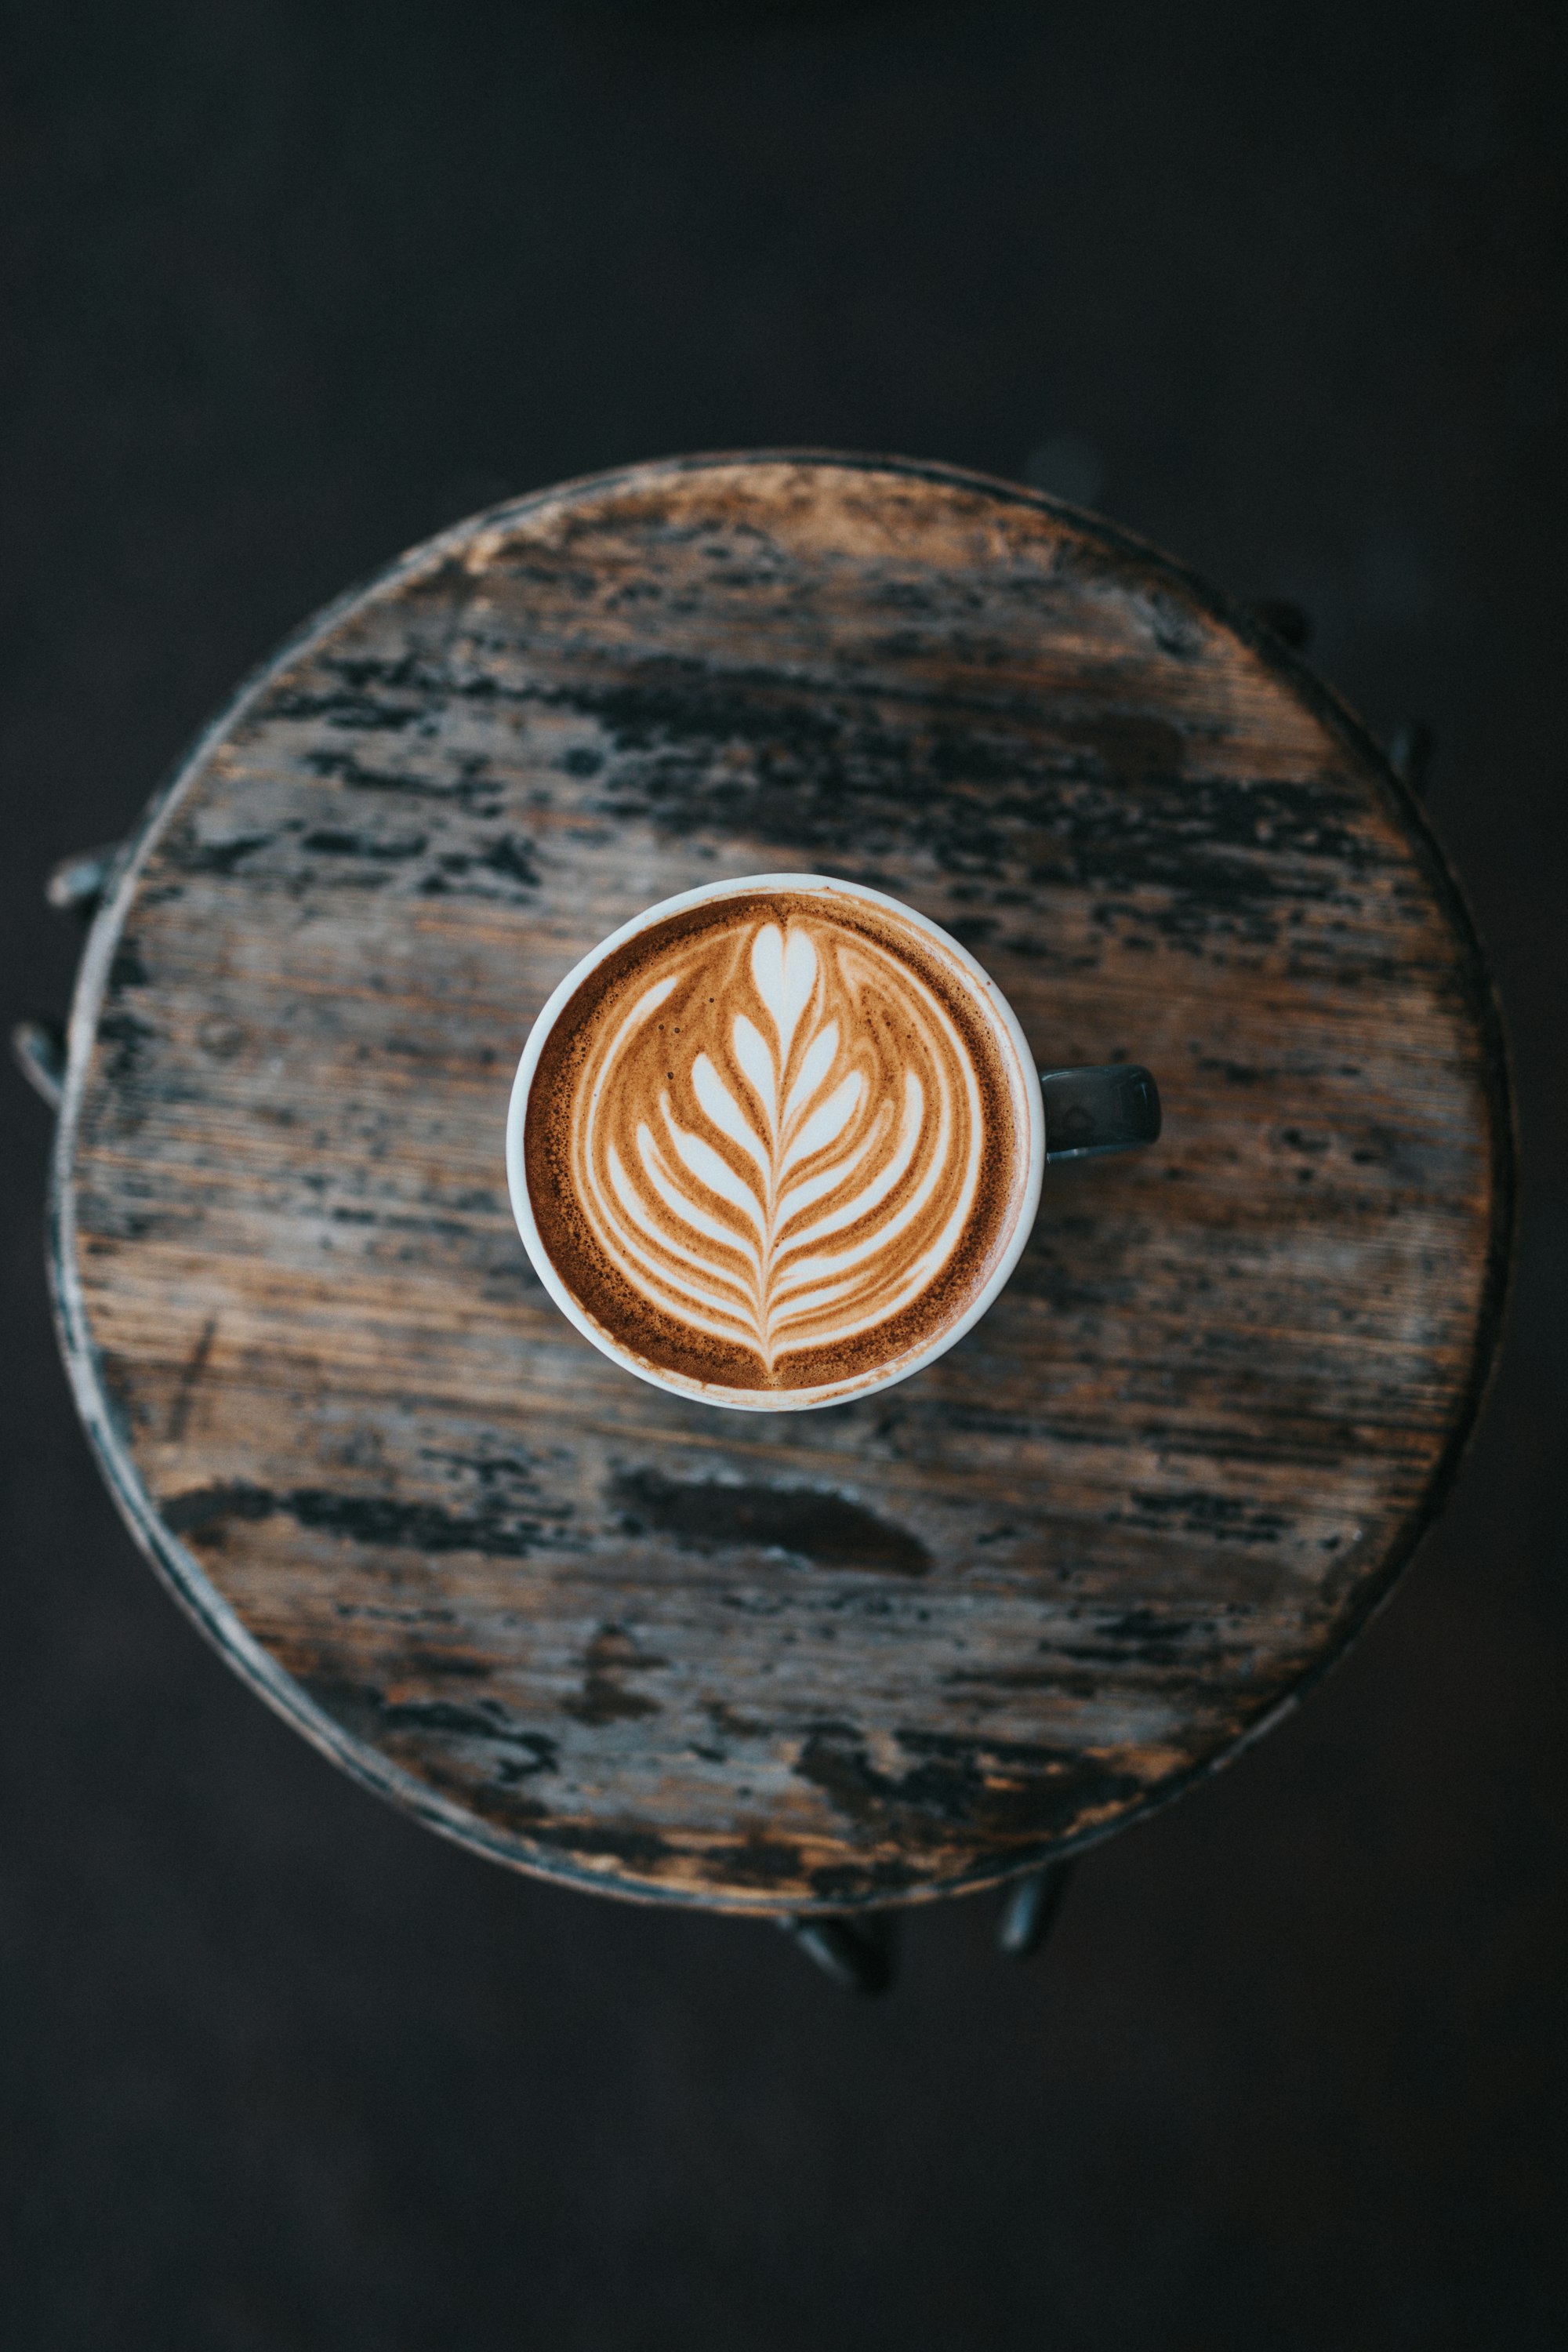 Espresso with latte art